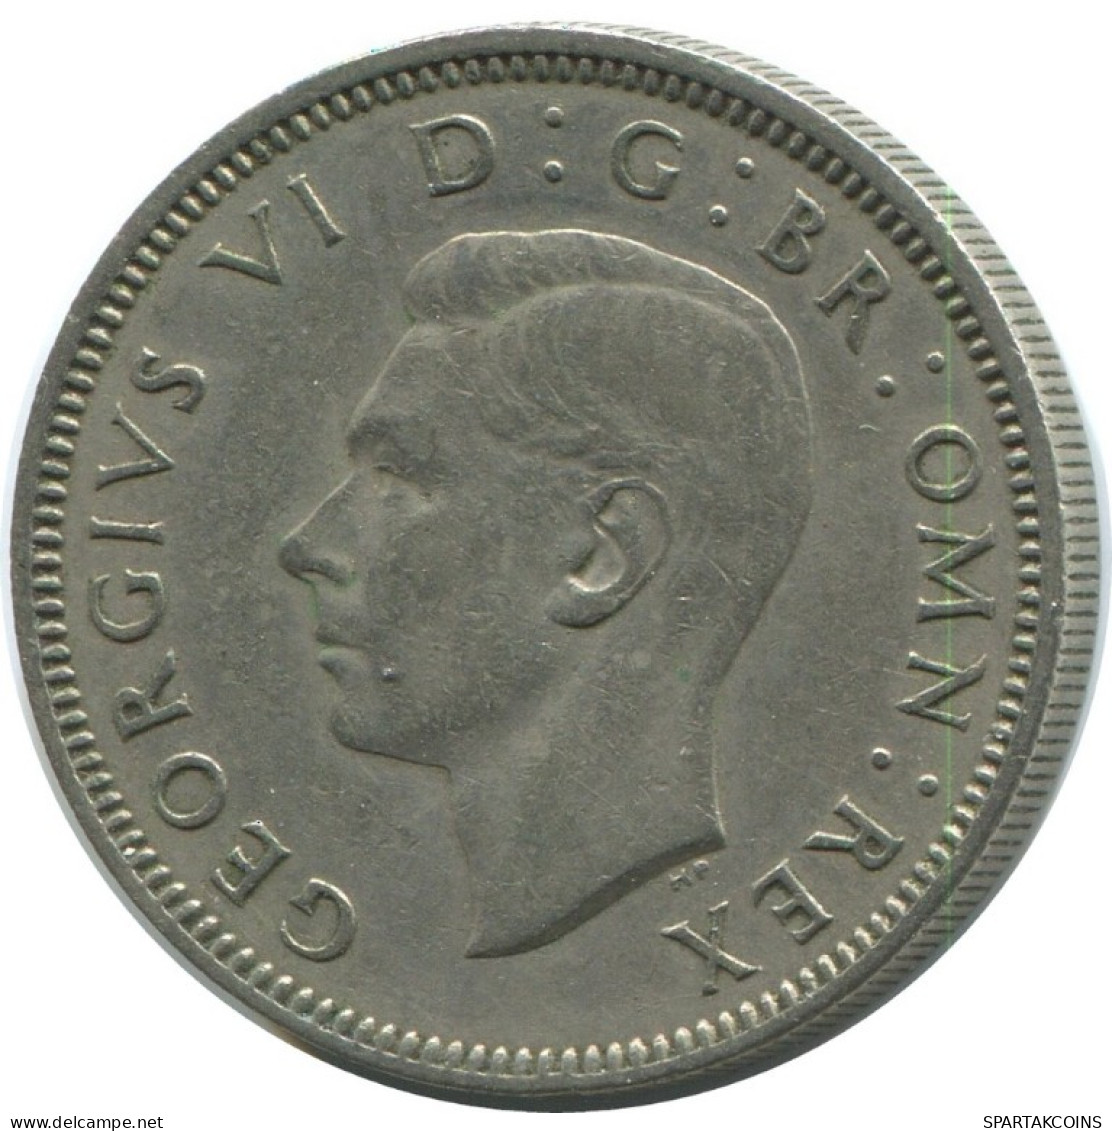 SHILLING 1950 UK GREAT BRITAIN Coin #AG975.1.U.A - I. 1 Shilling